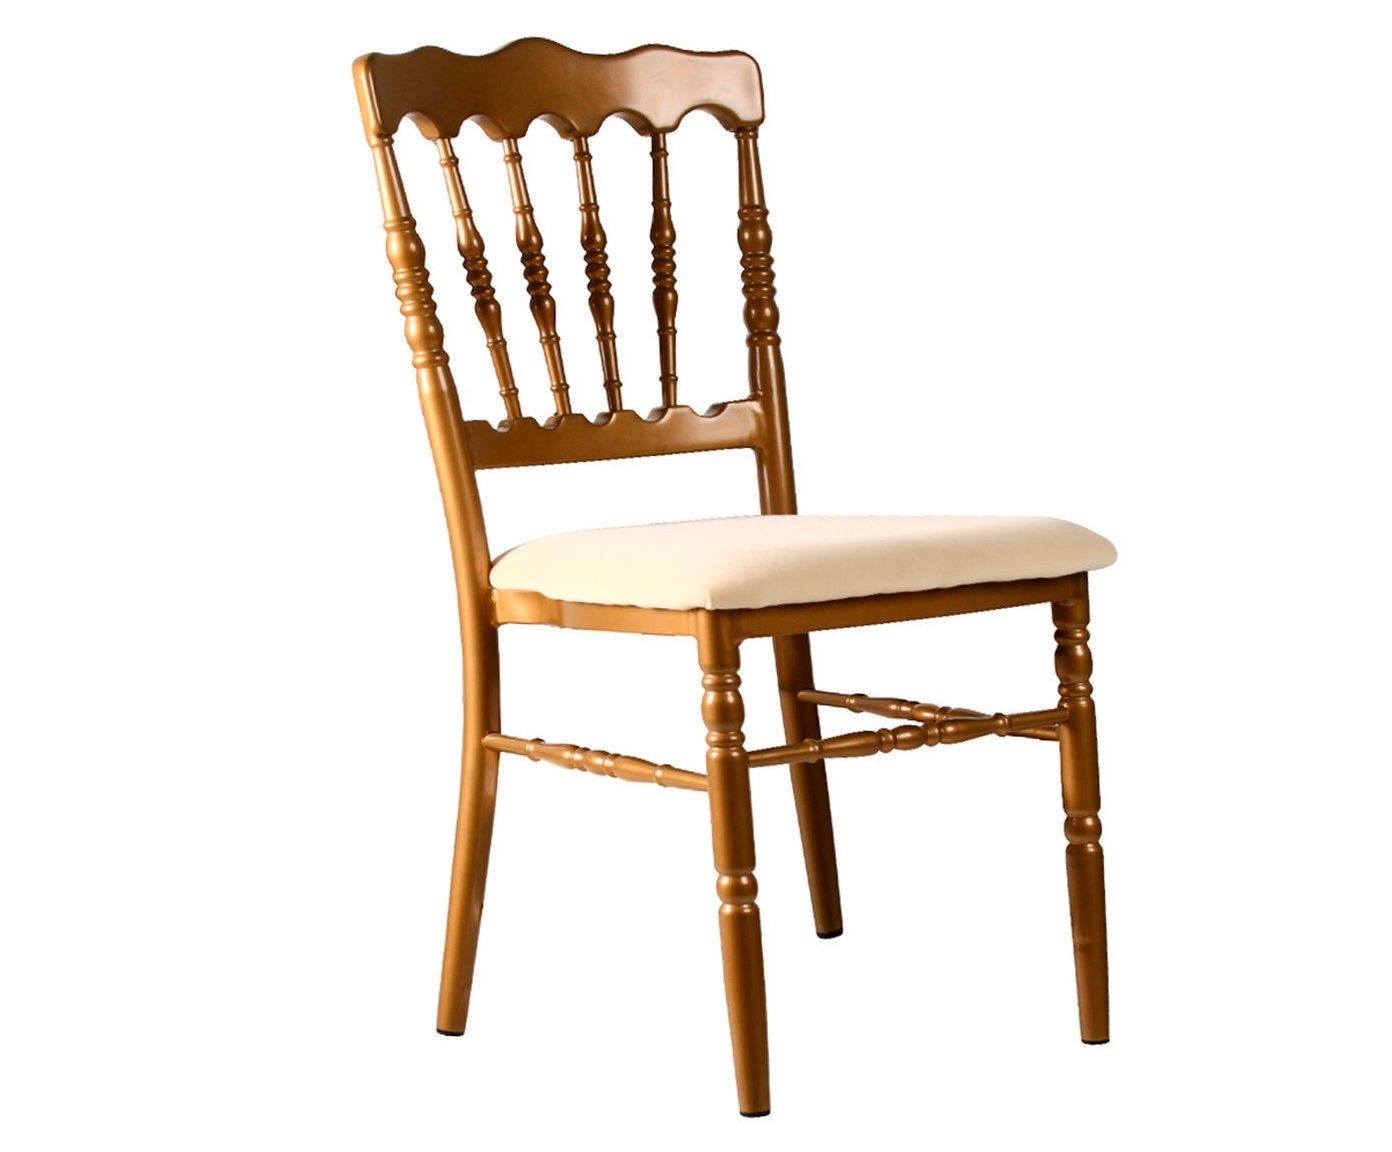 Cadeira goldin dion | Westwing.com.br